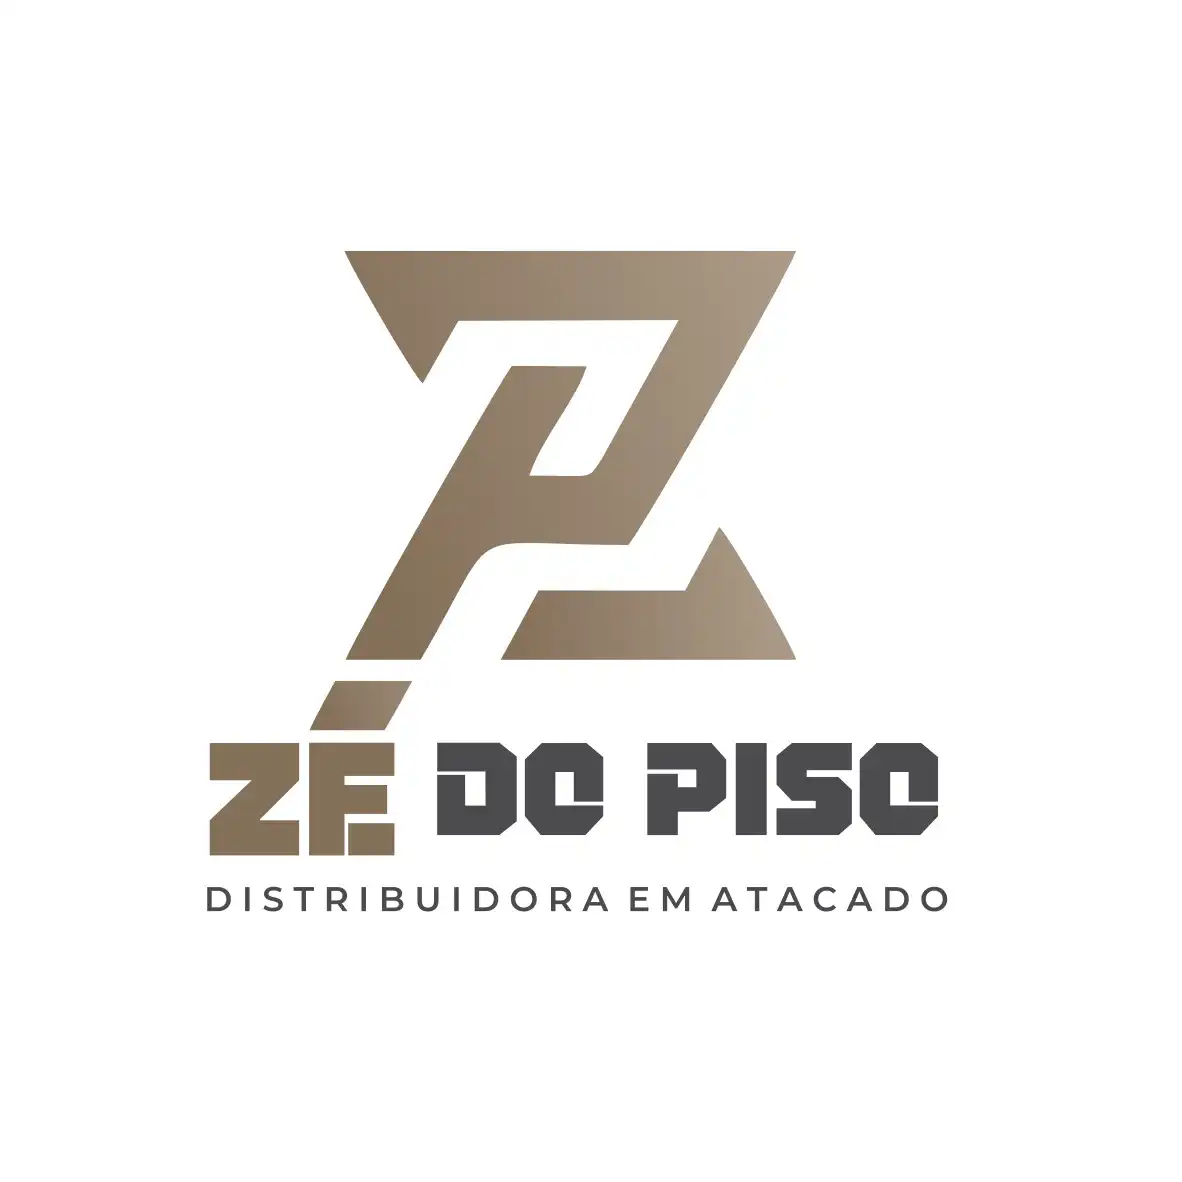 
Logotipo Logomarca Piso em Atacado



